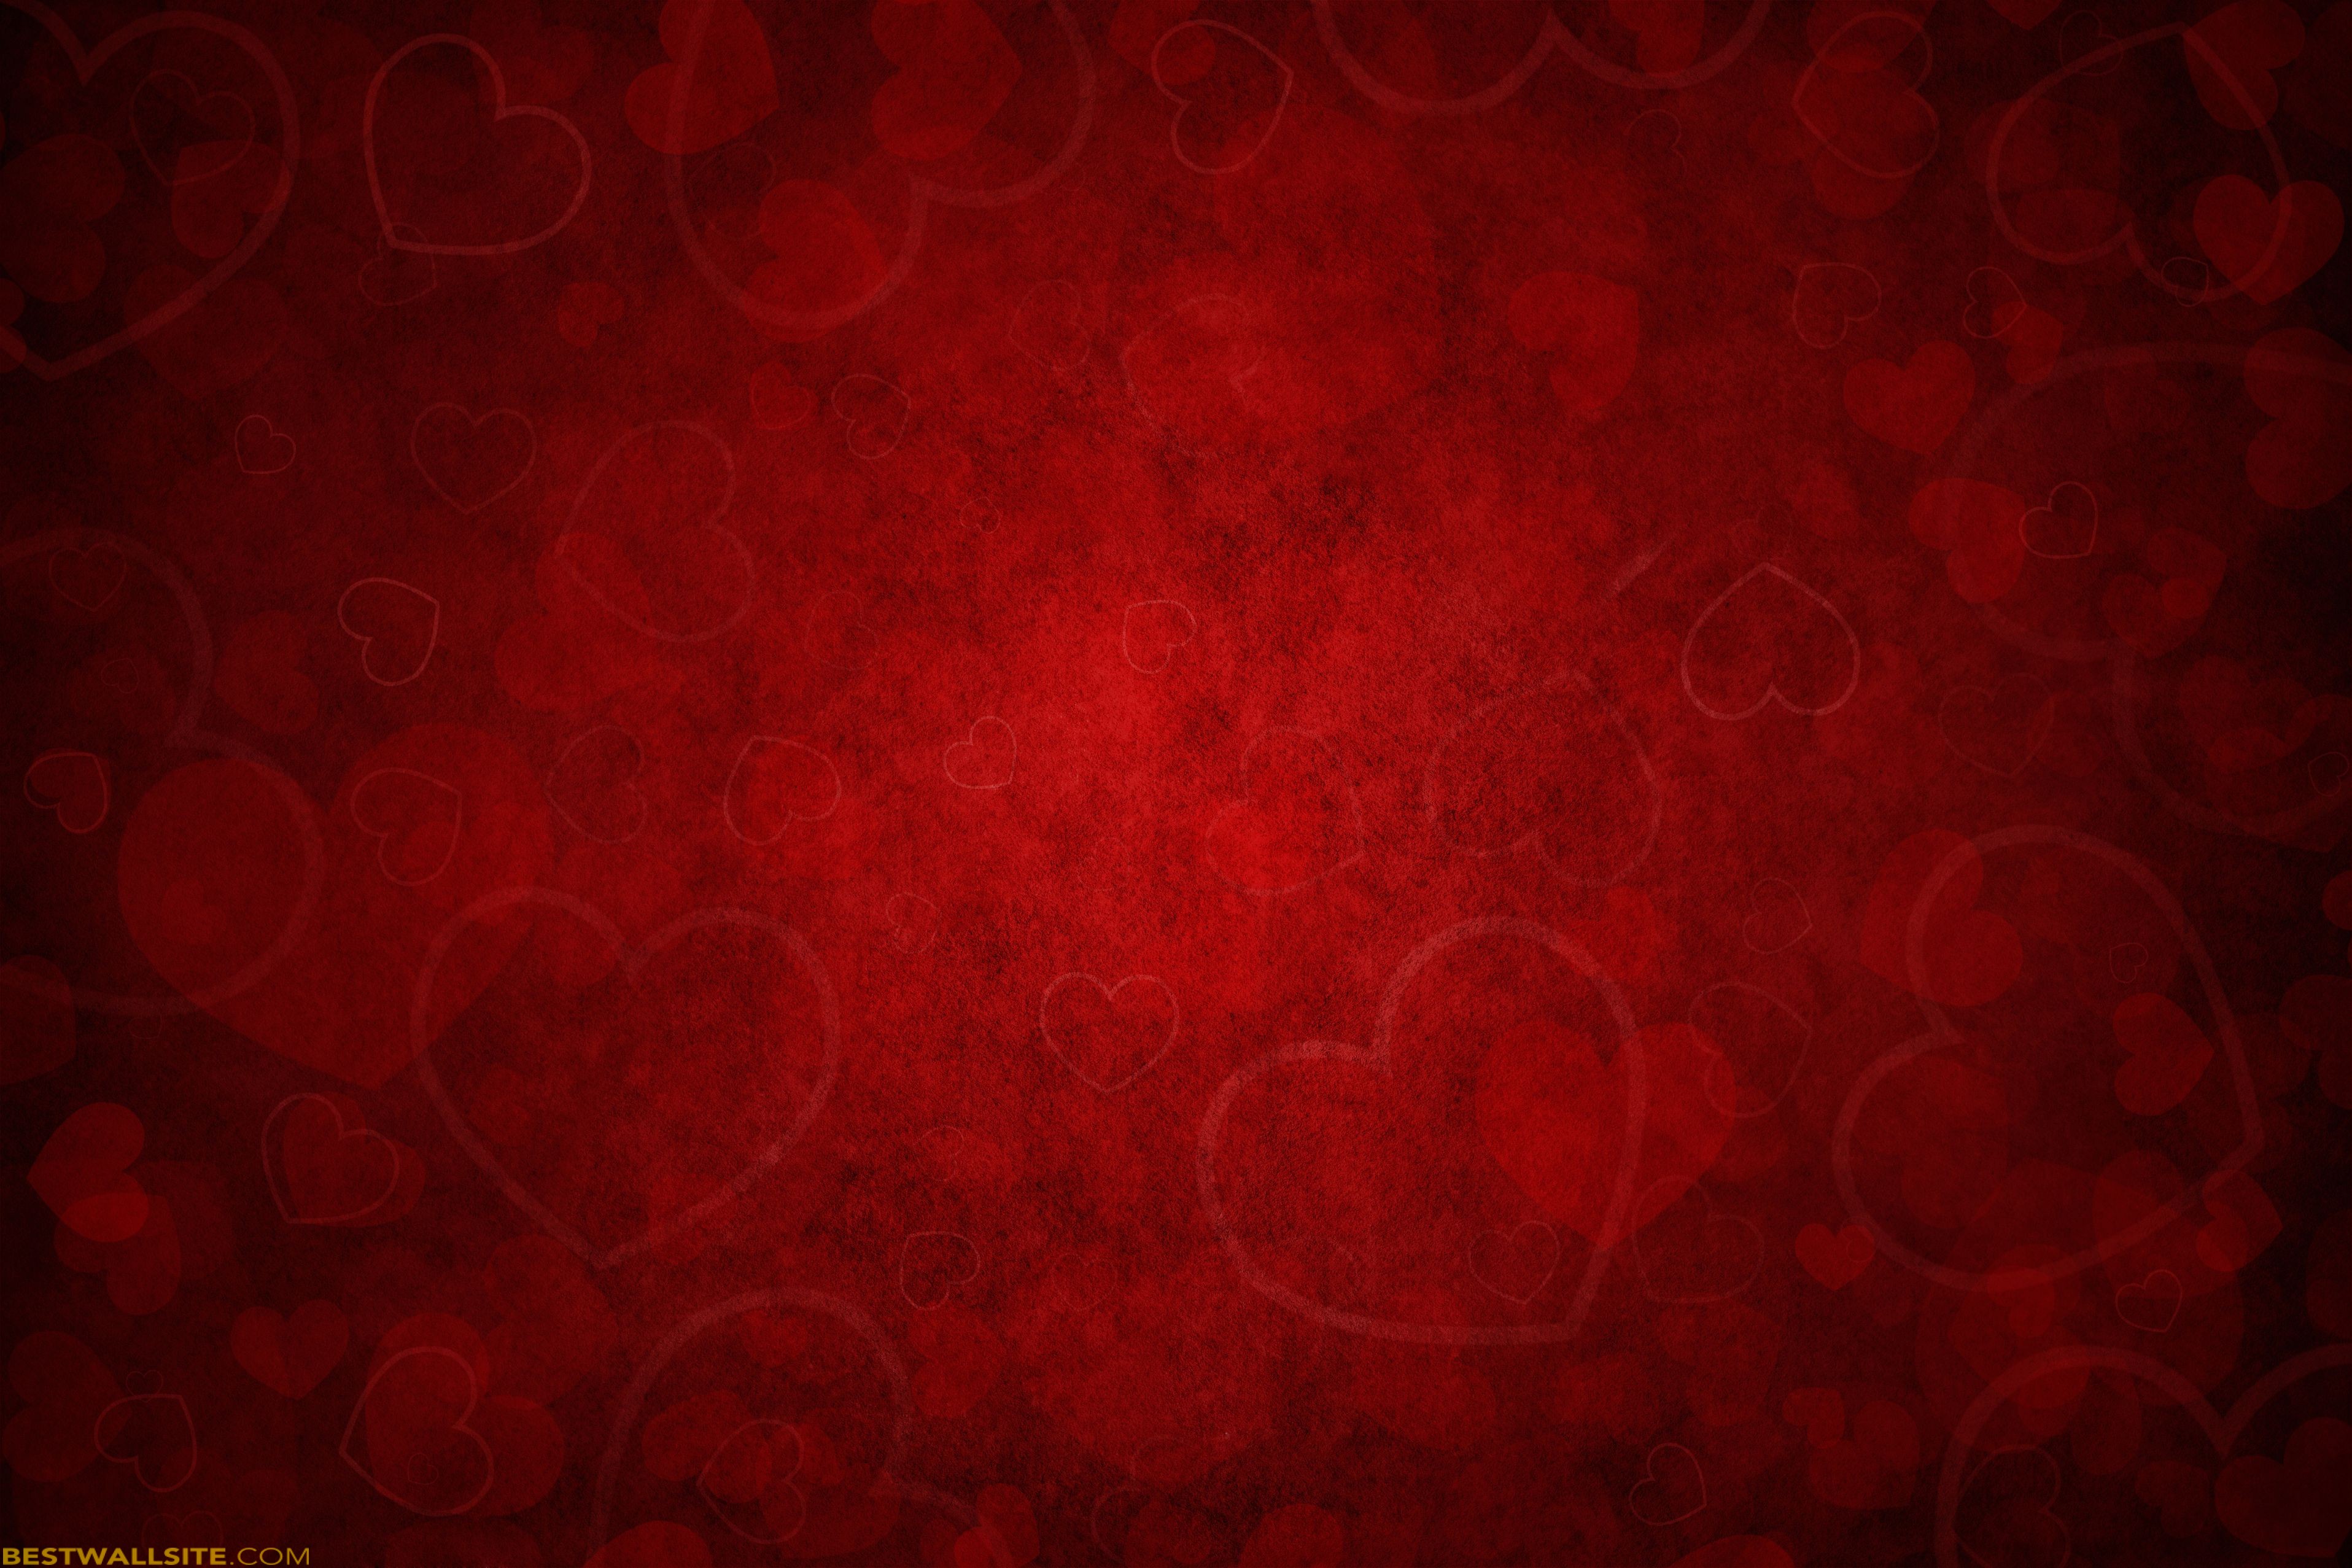 Blood Red Hearts Screensaver Bestwallsite